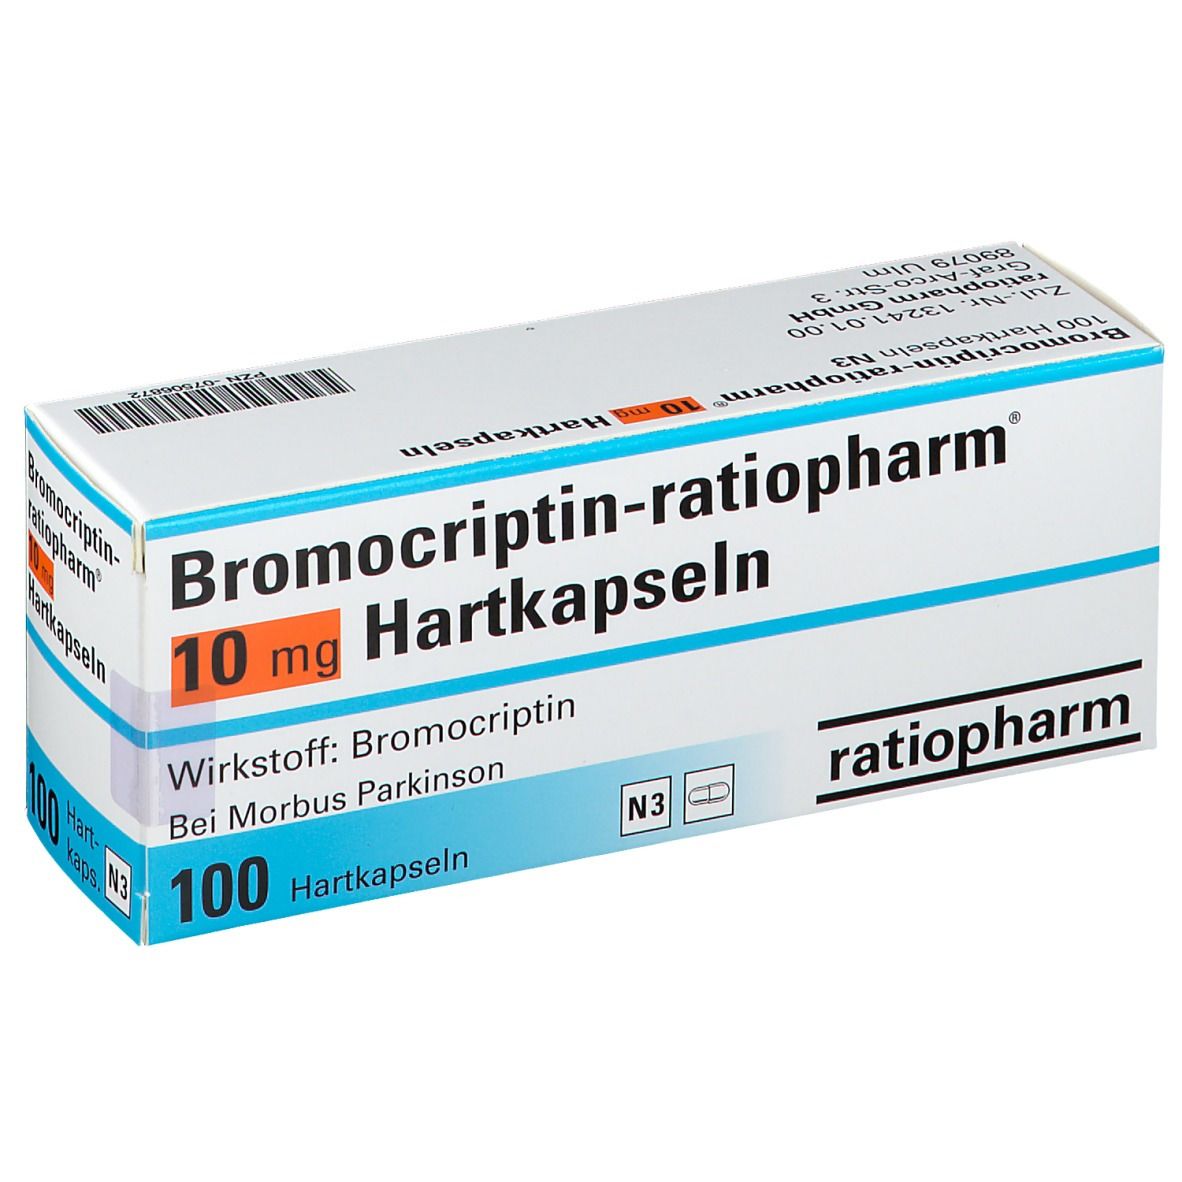 Bromocriptin-ratiopharm® 10 mg